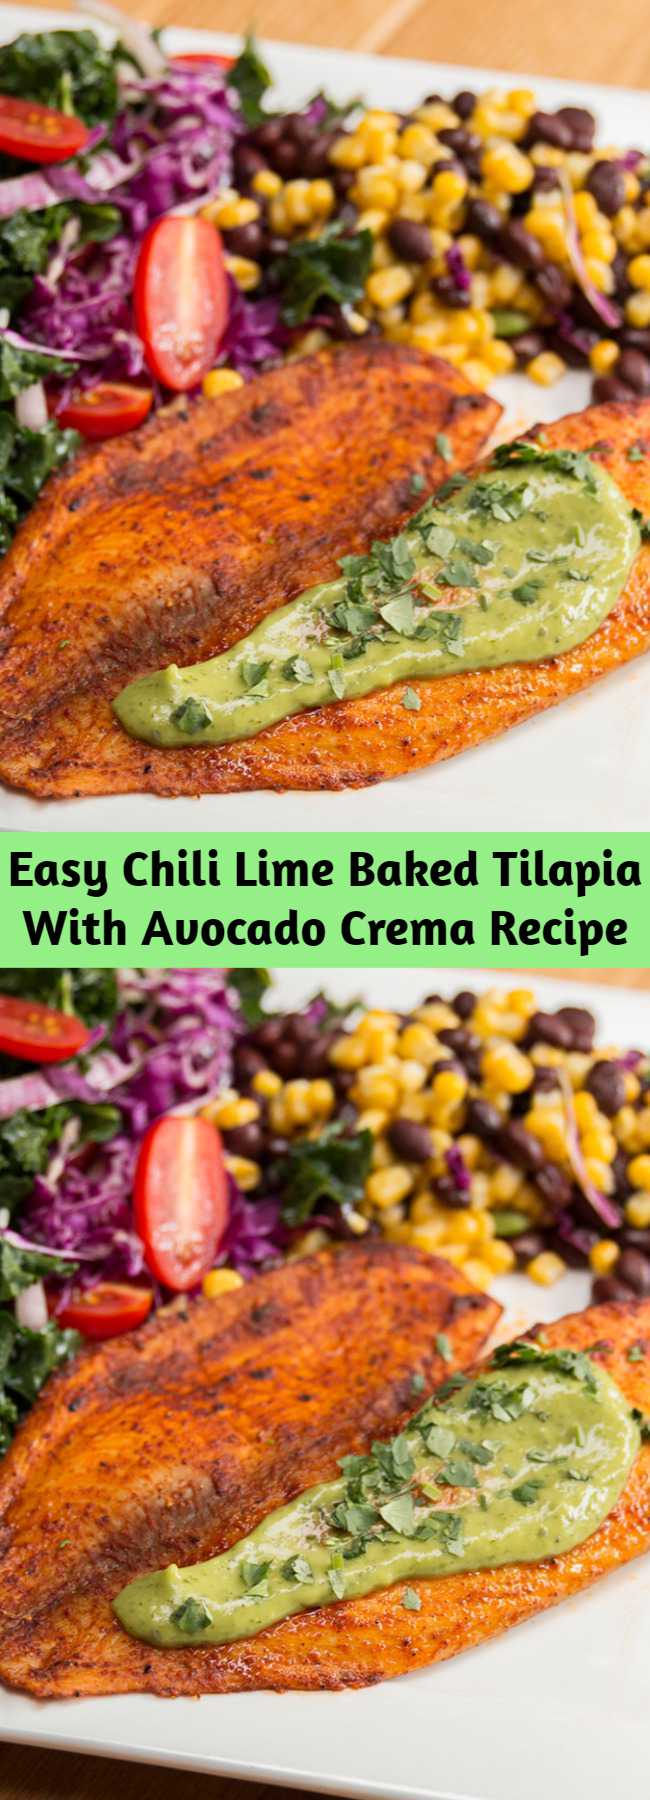 Easy Chili Lime Baked Tilapia With Avocado Crema Recipe